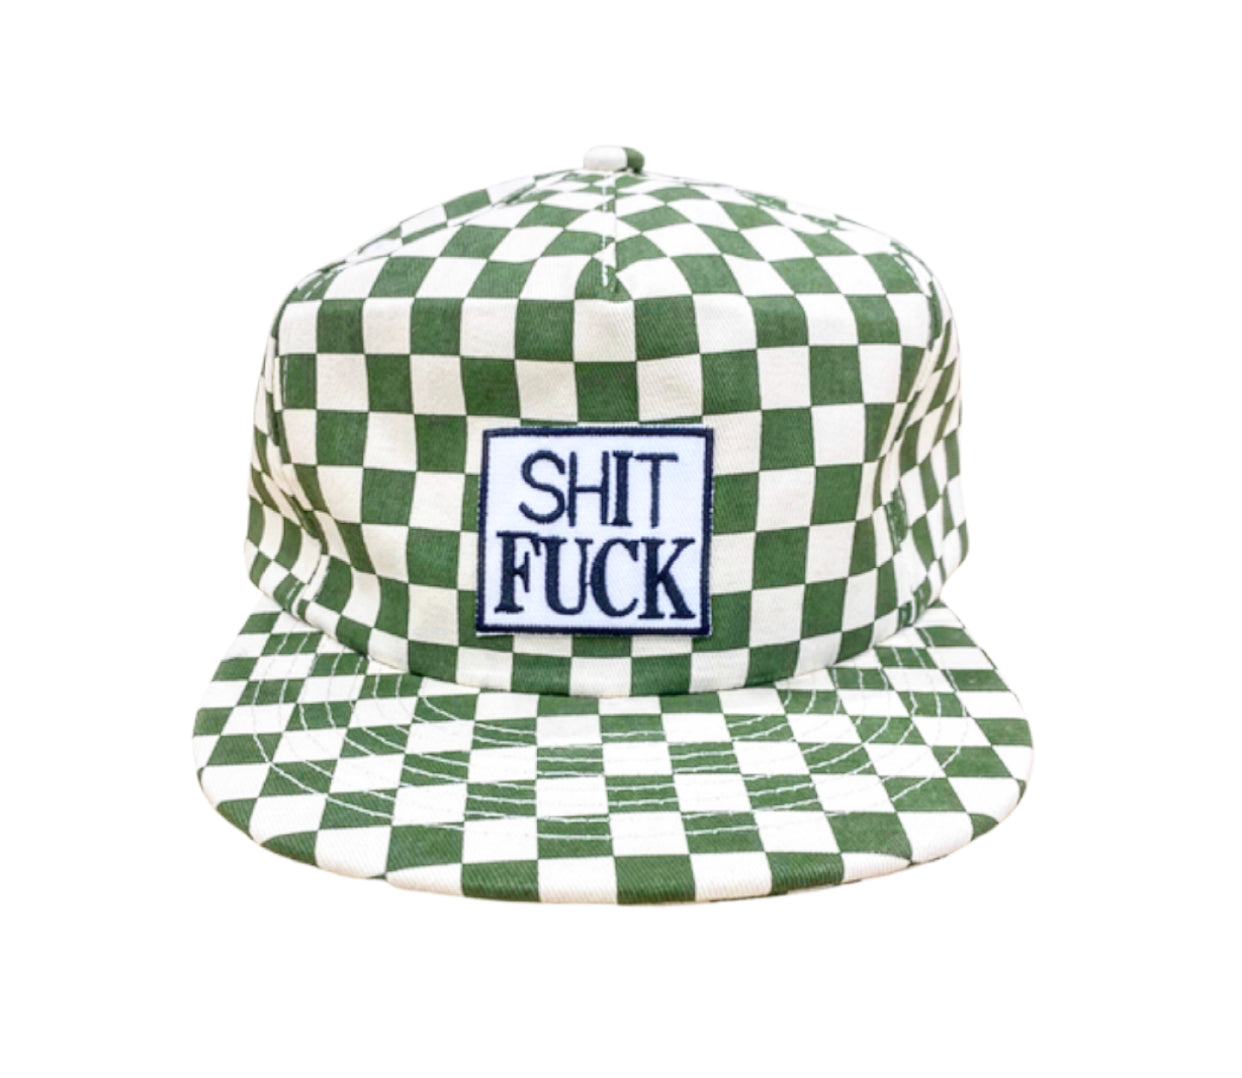 Shit Fuck Checkered Hat